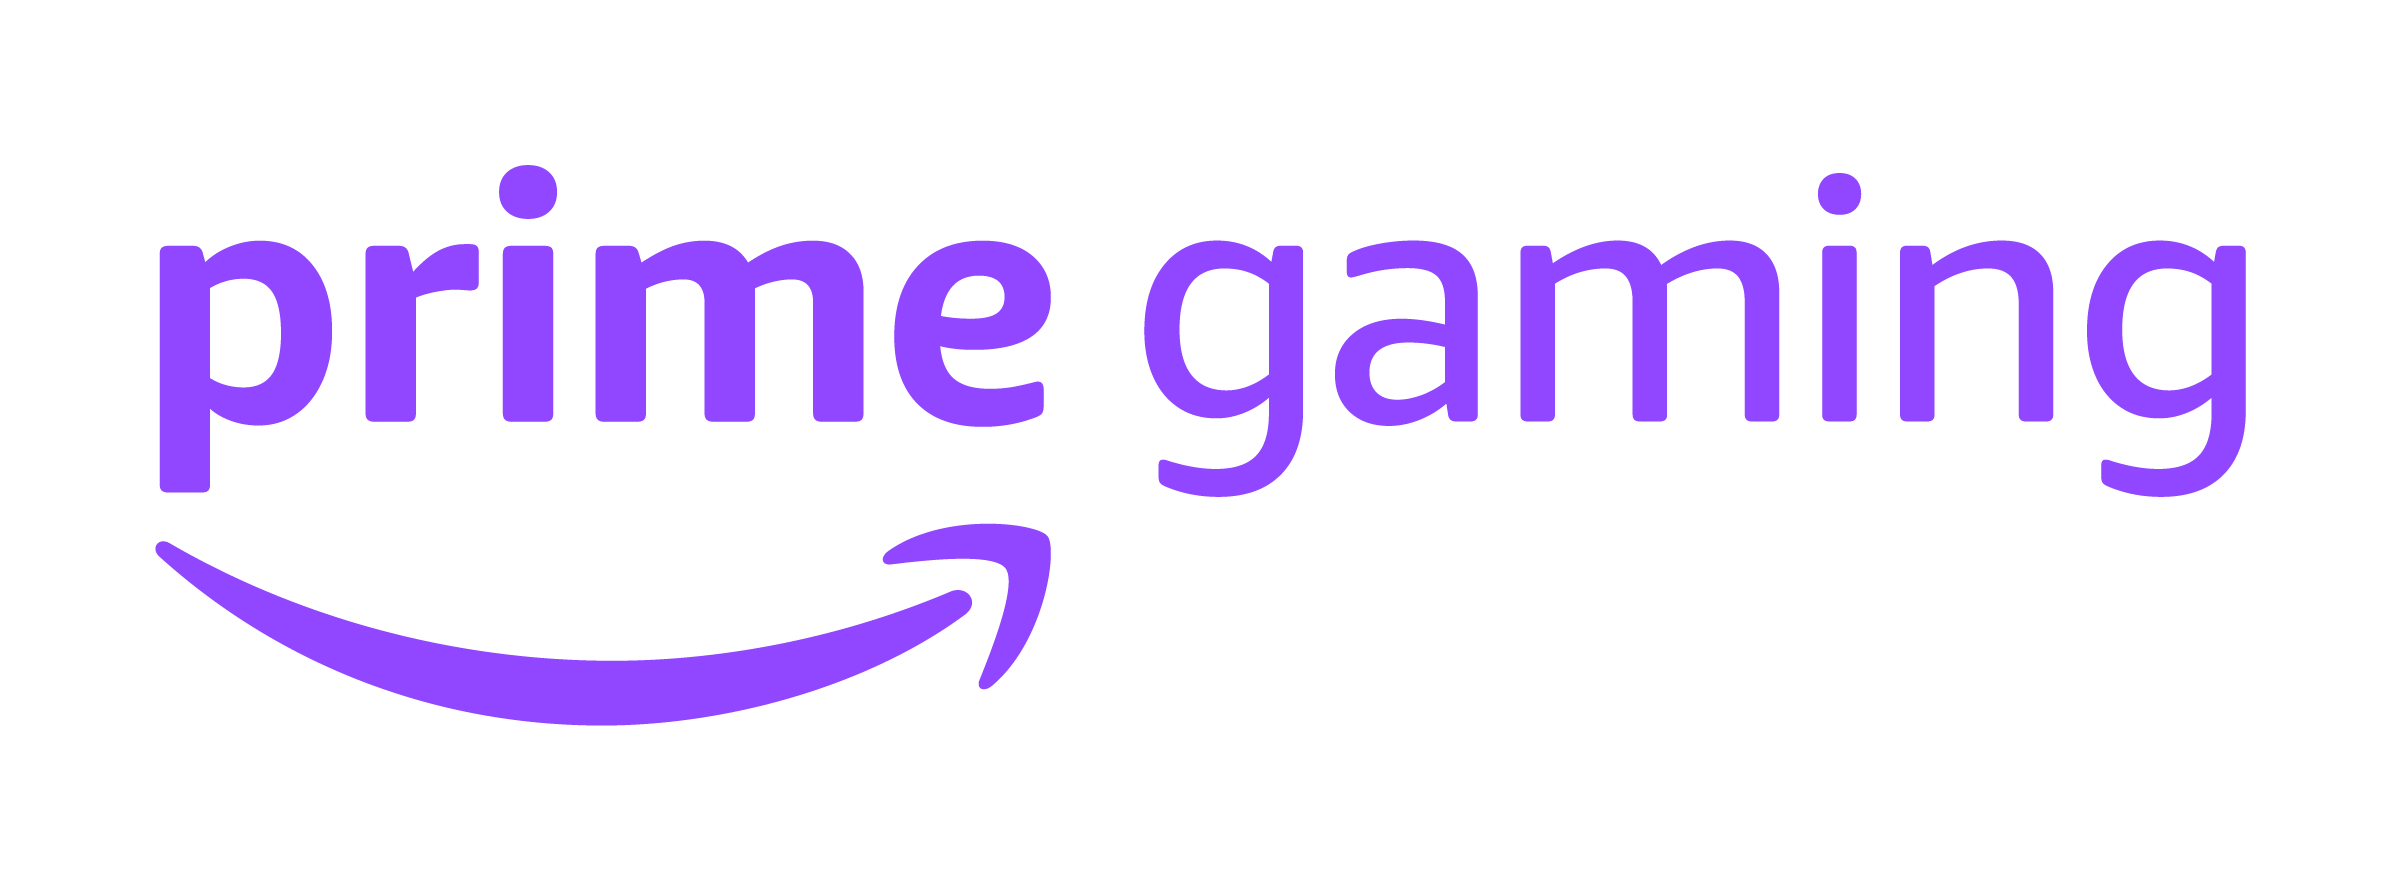 Amazon Prime Logo PNG Image HD